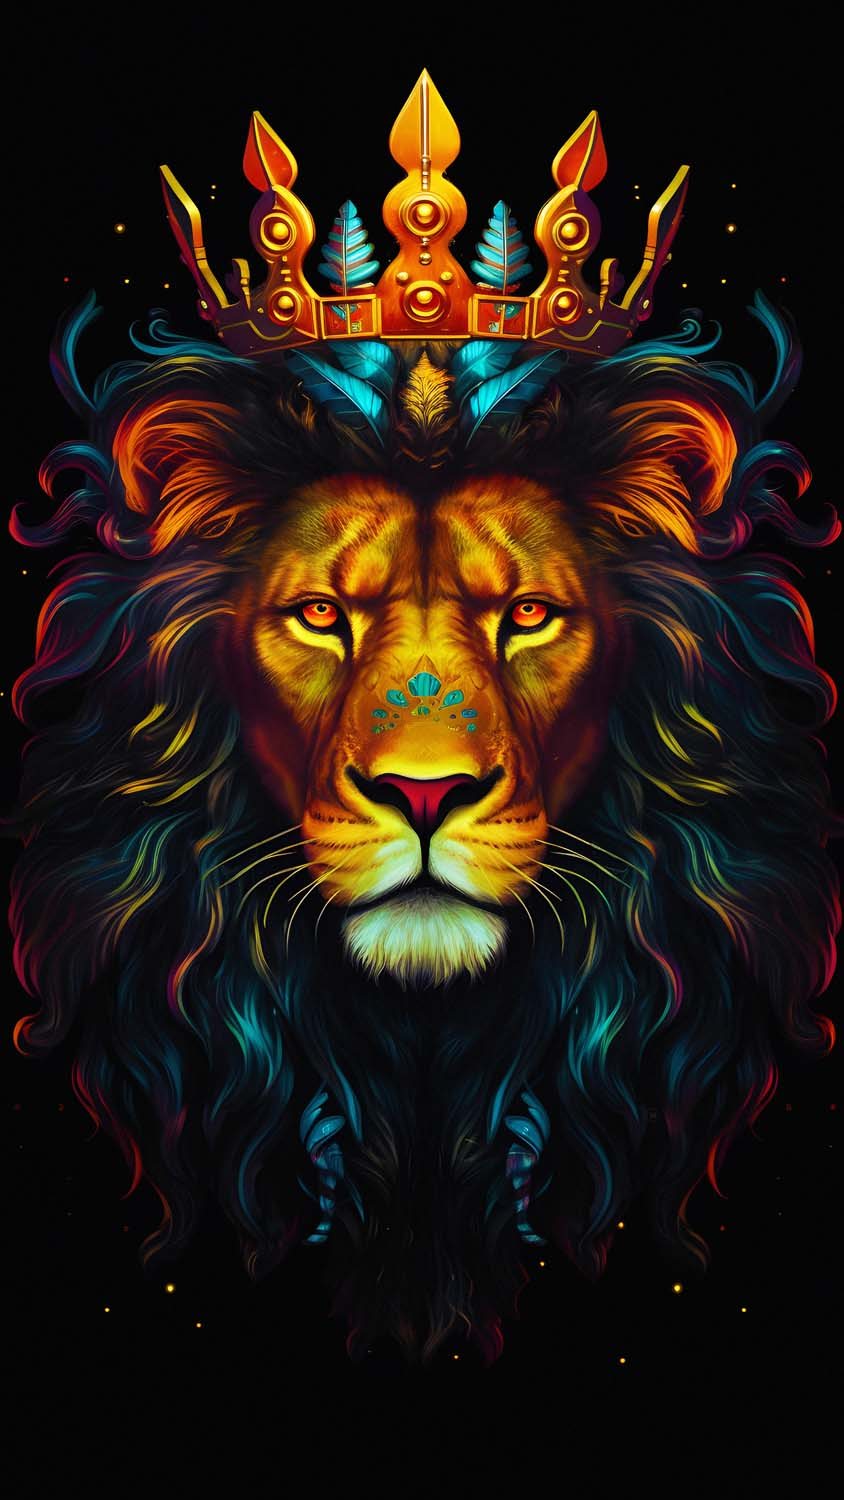 50 Lion King Wallpaper for Desktop  WallpaperSafari